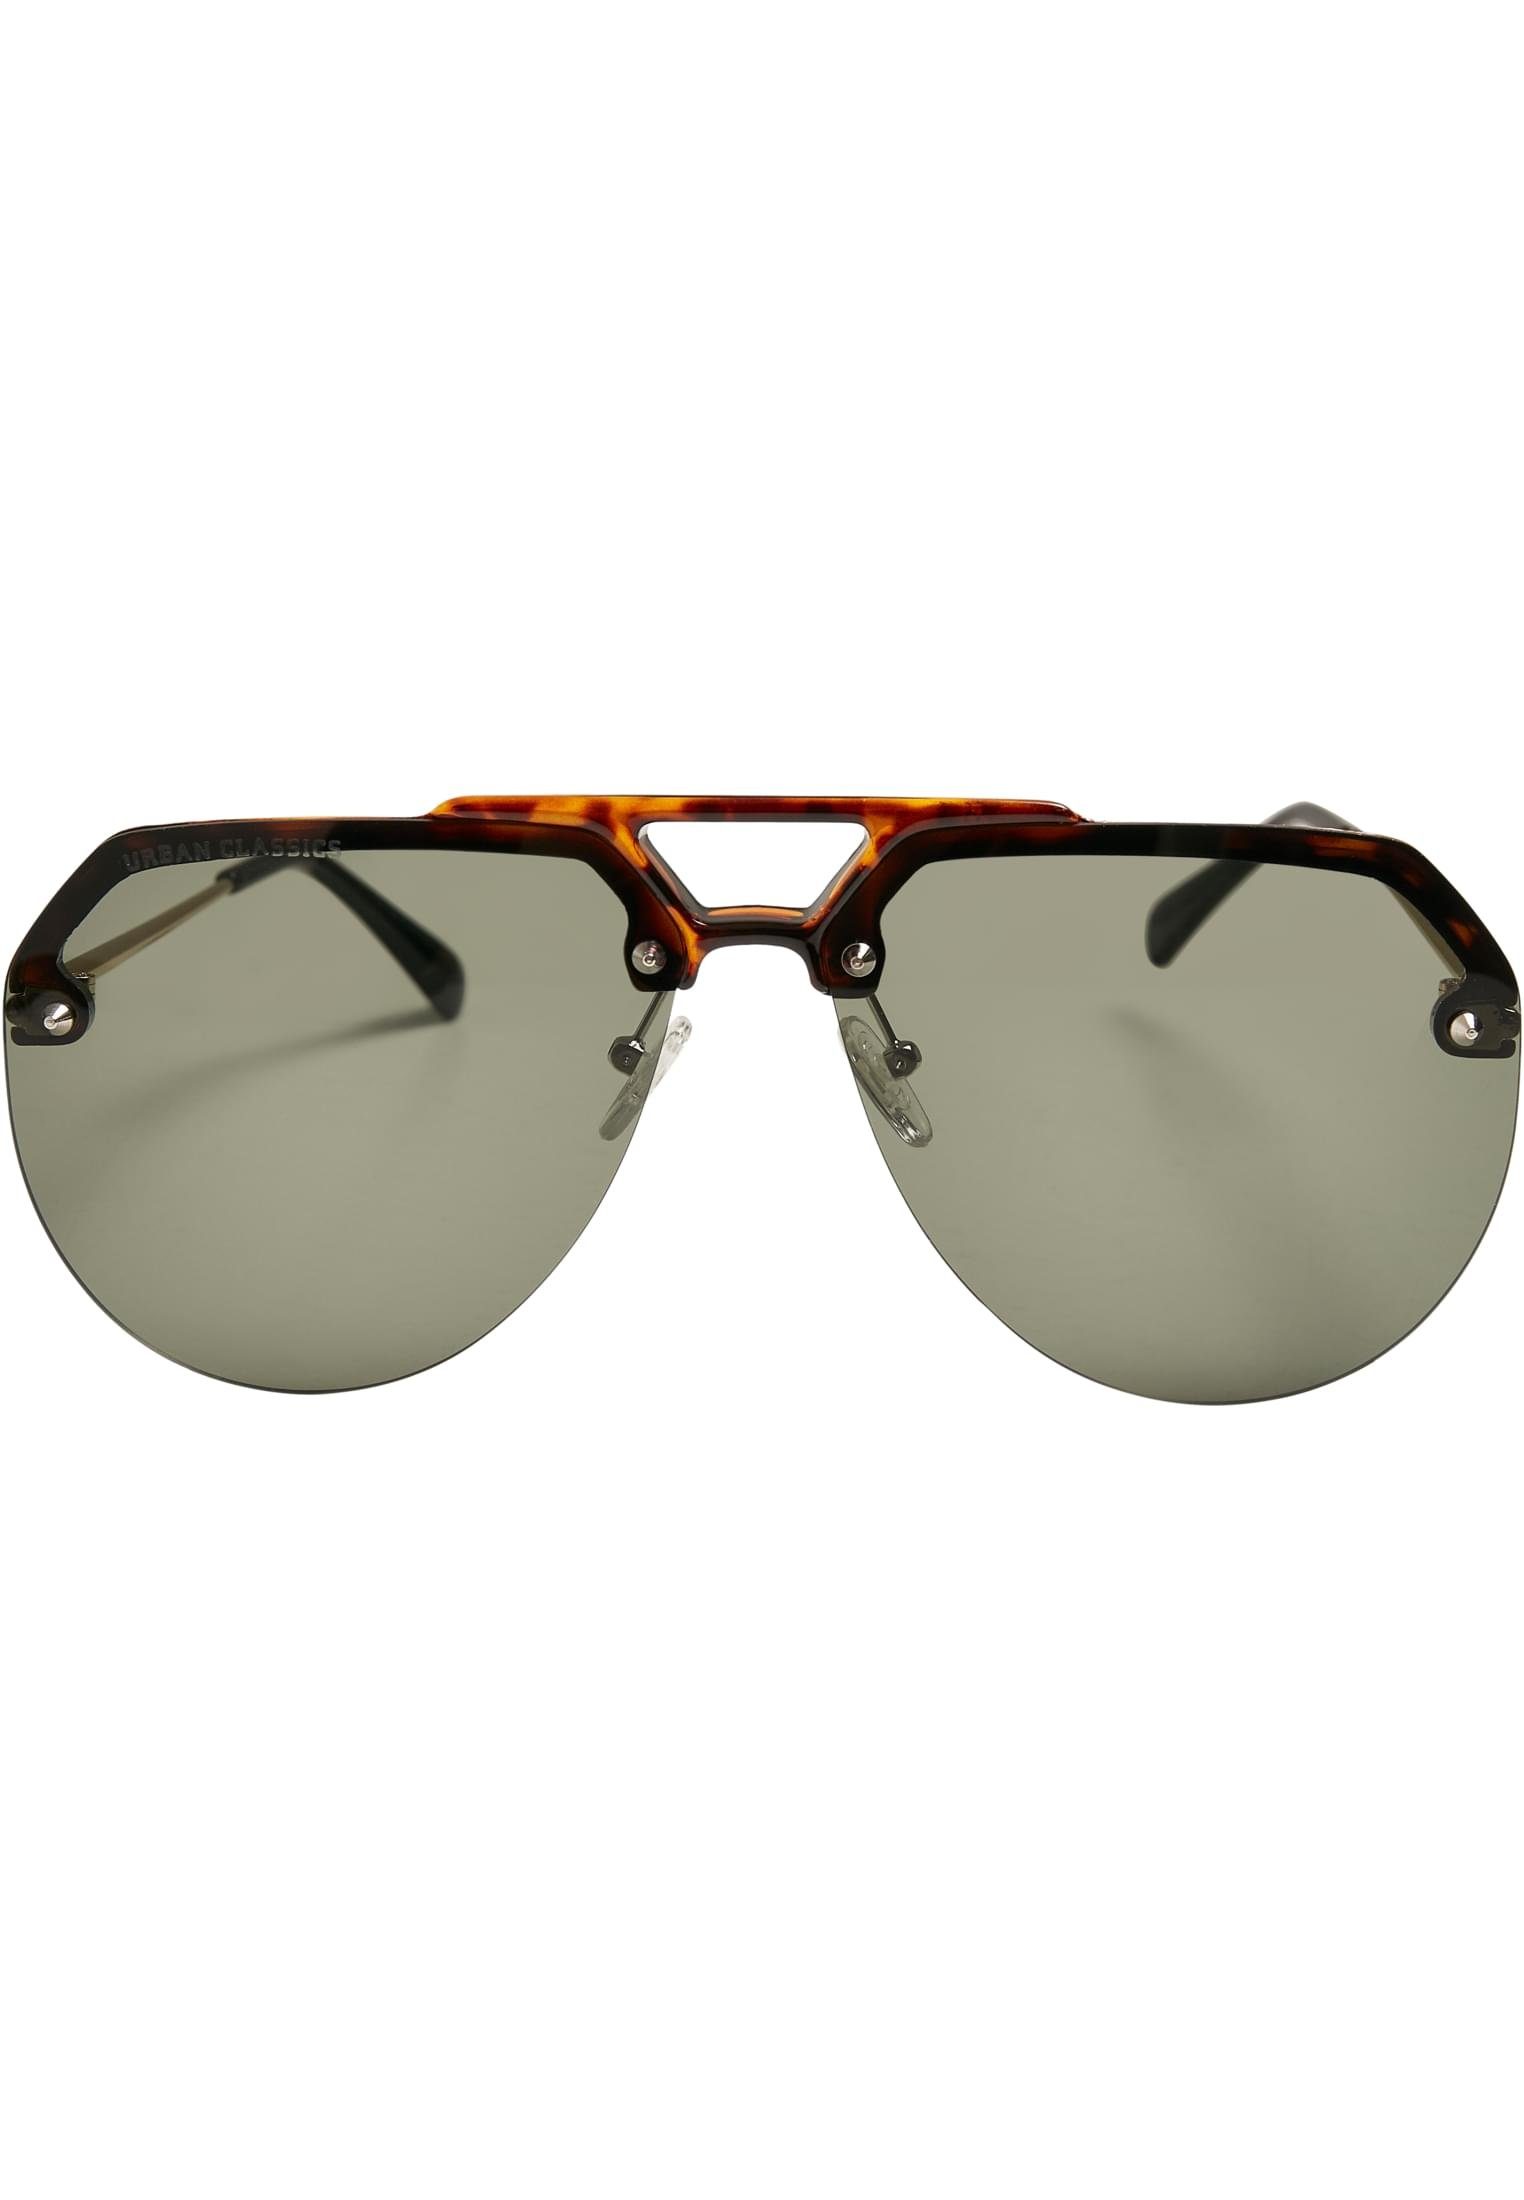 Sunglasses Sonnenbrille Toronto CLASSICS URBAN Unisex amber